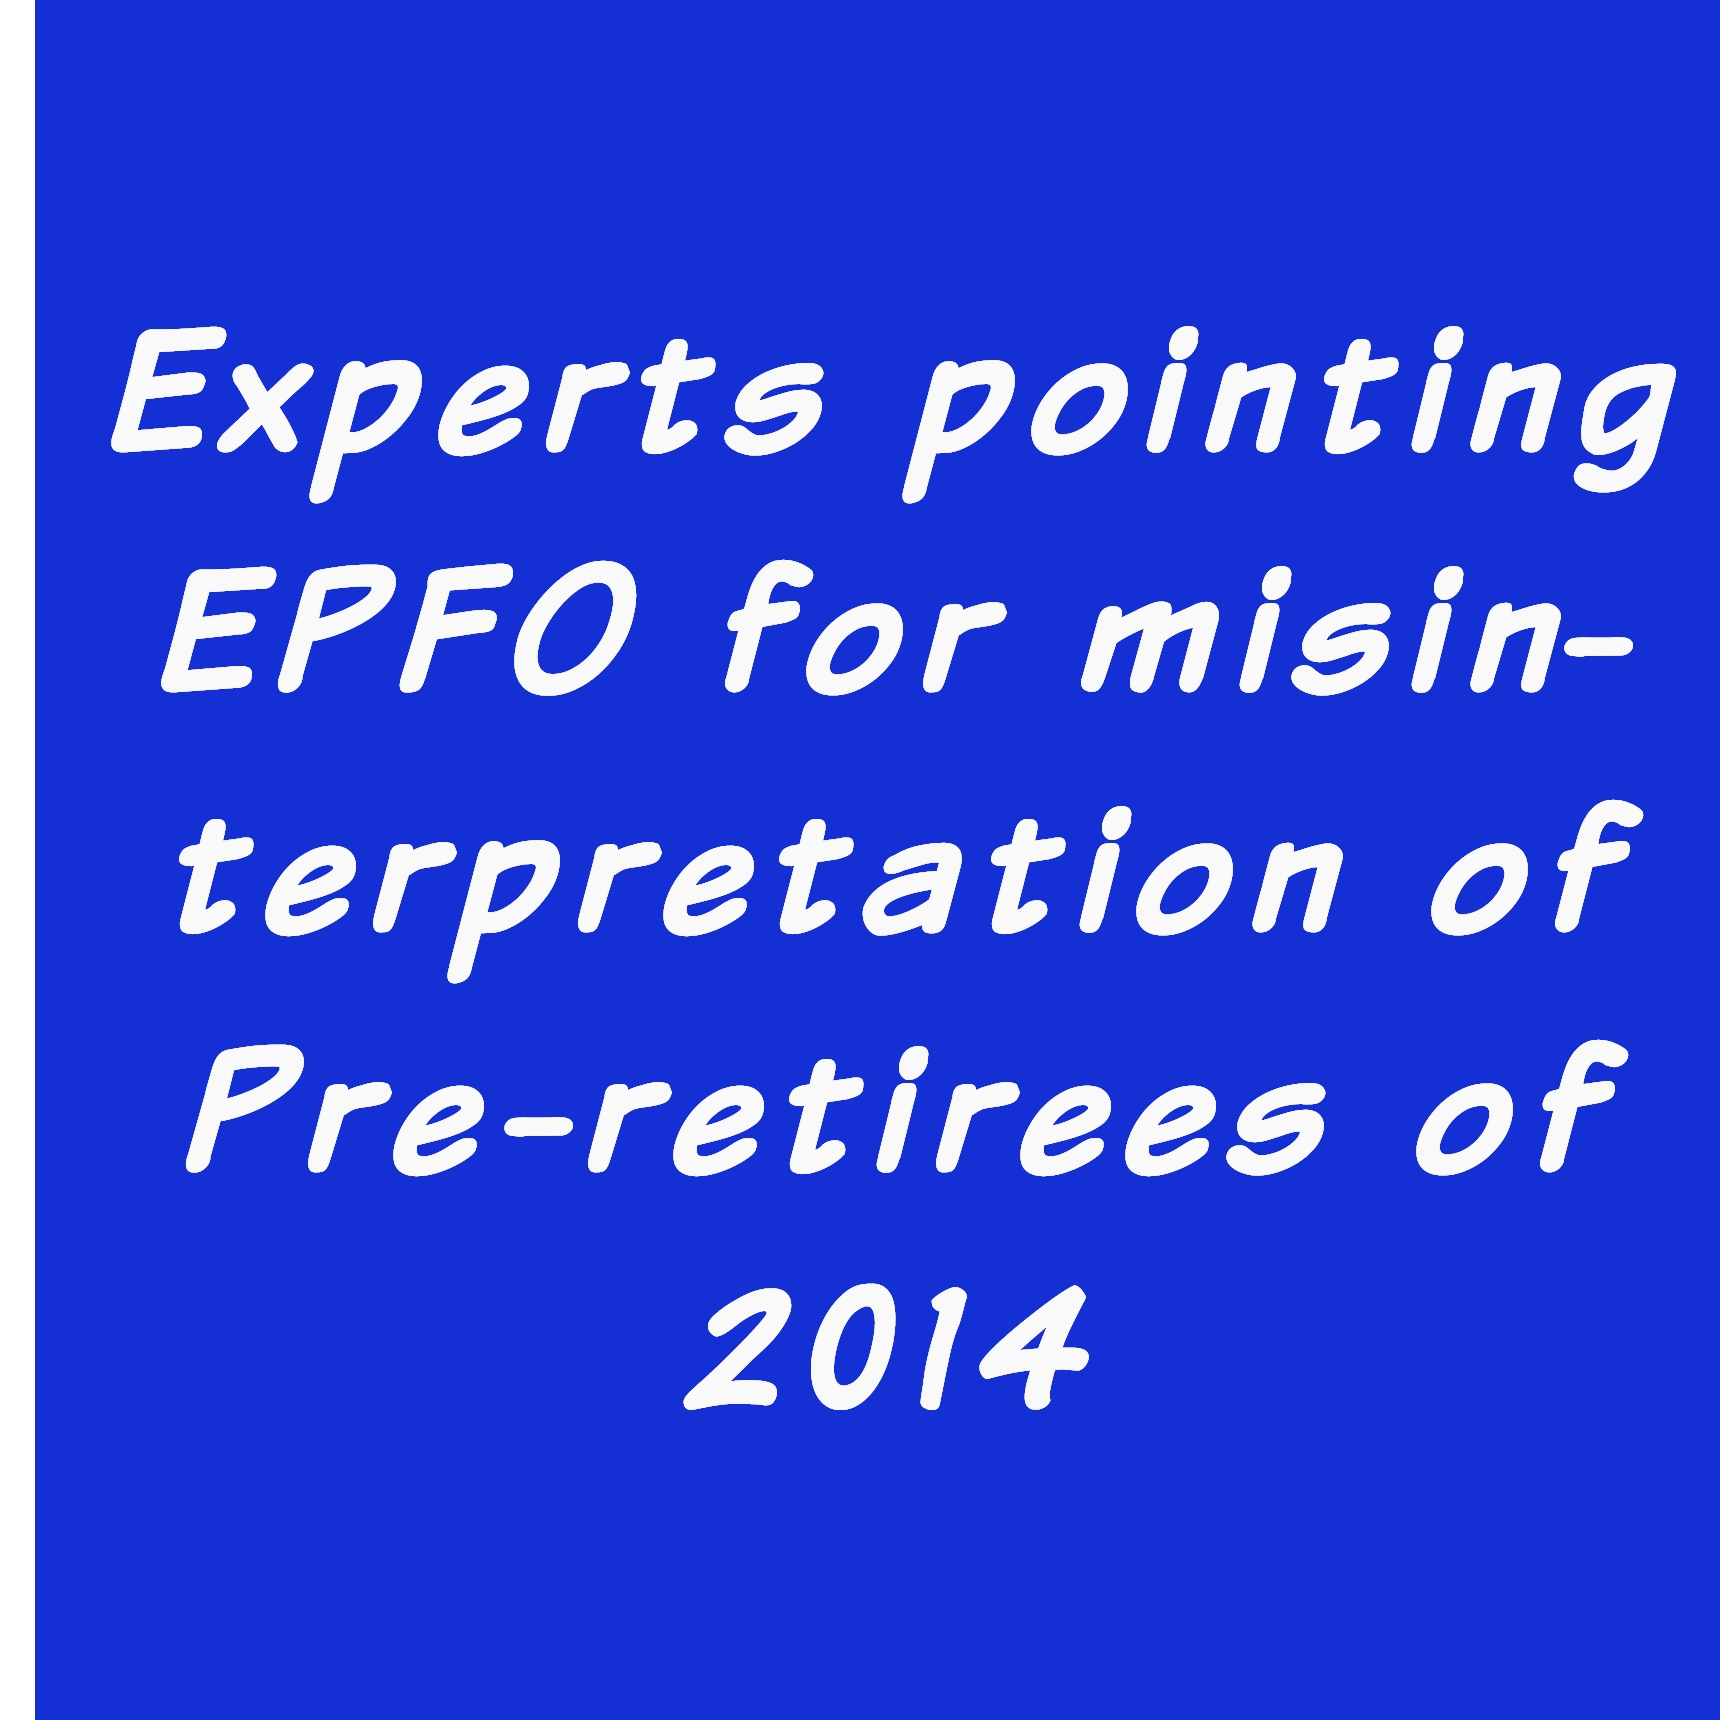 Experts pointing EPFO for misinterpretation of Pre-retirees of 2014